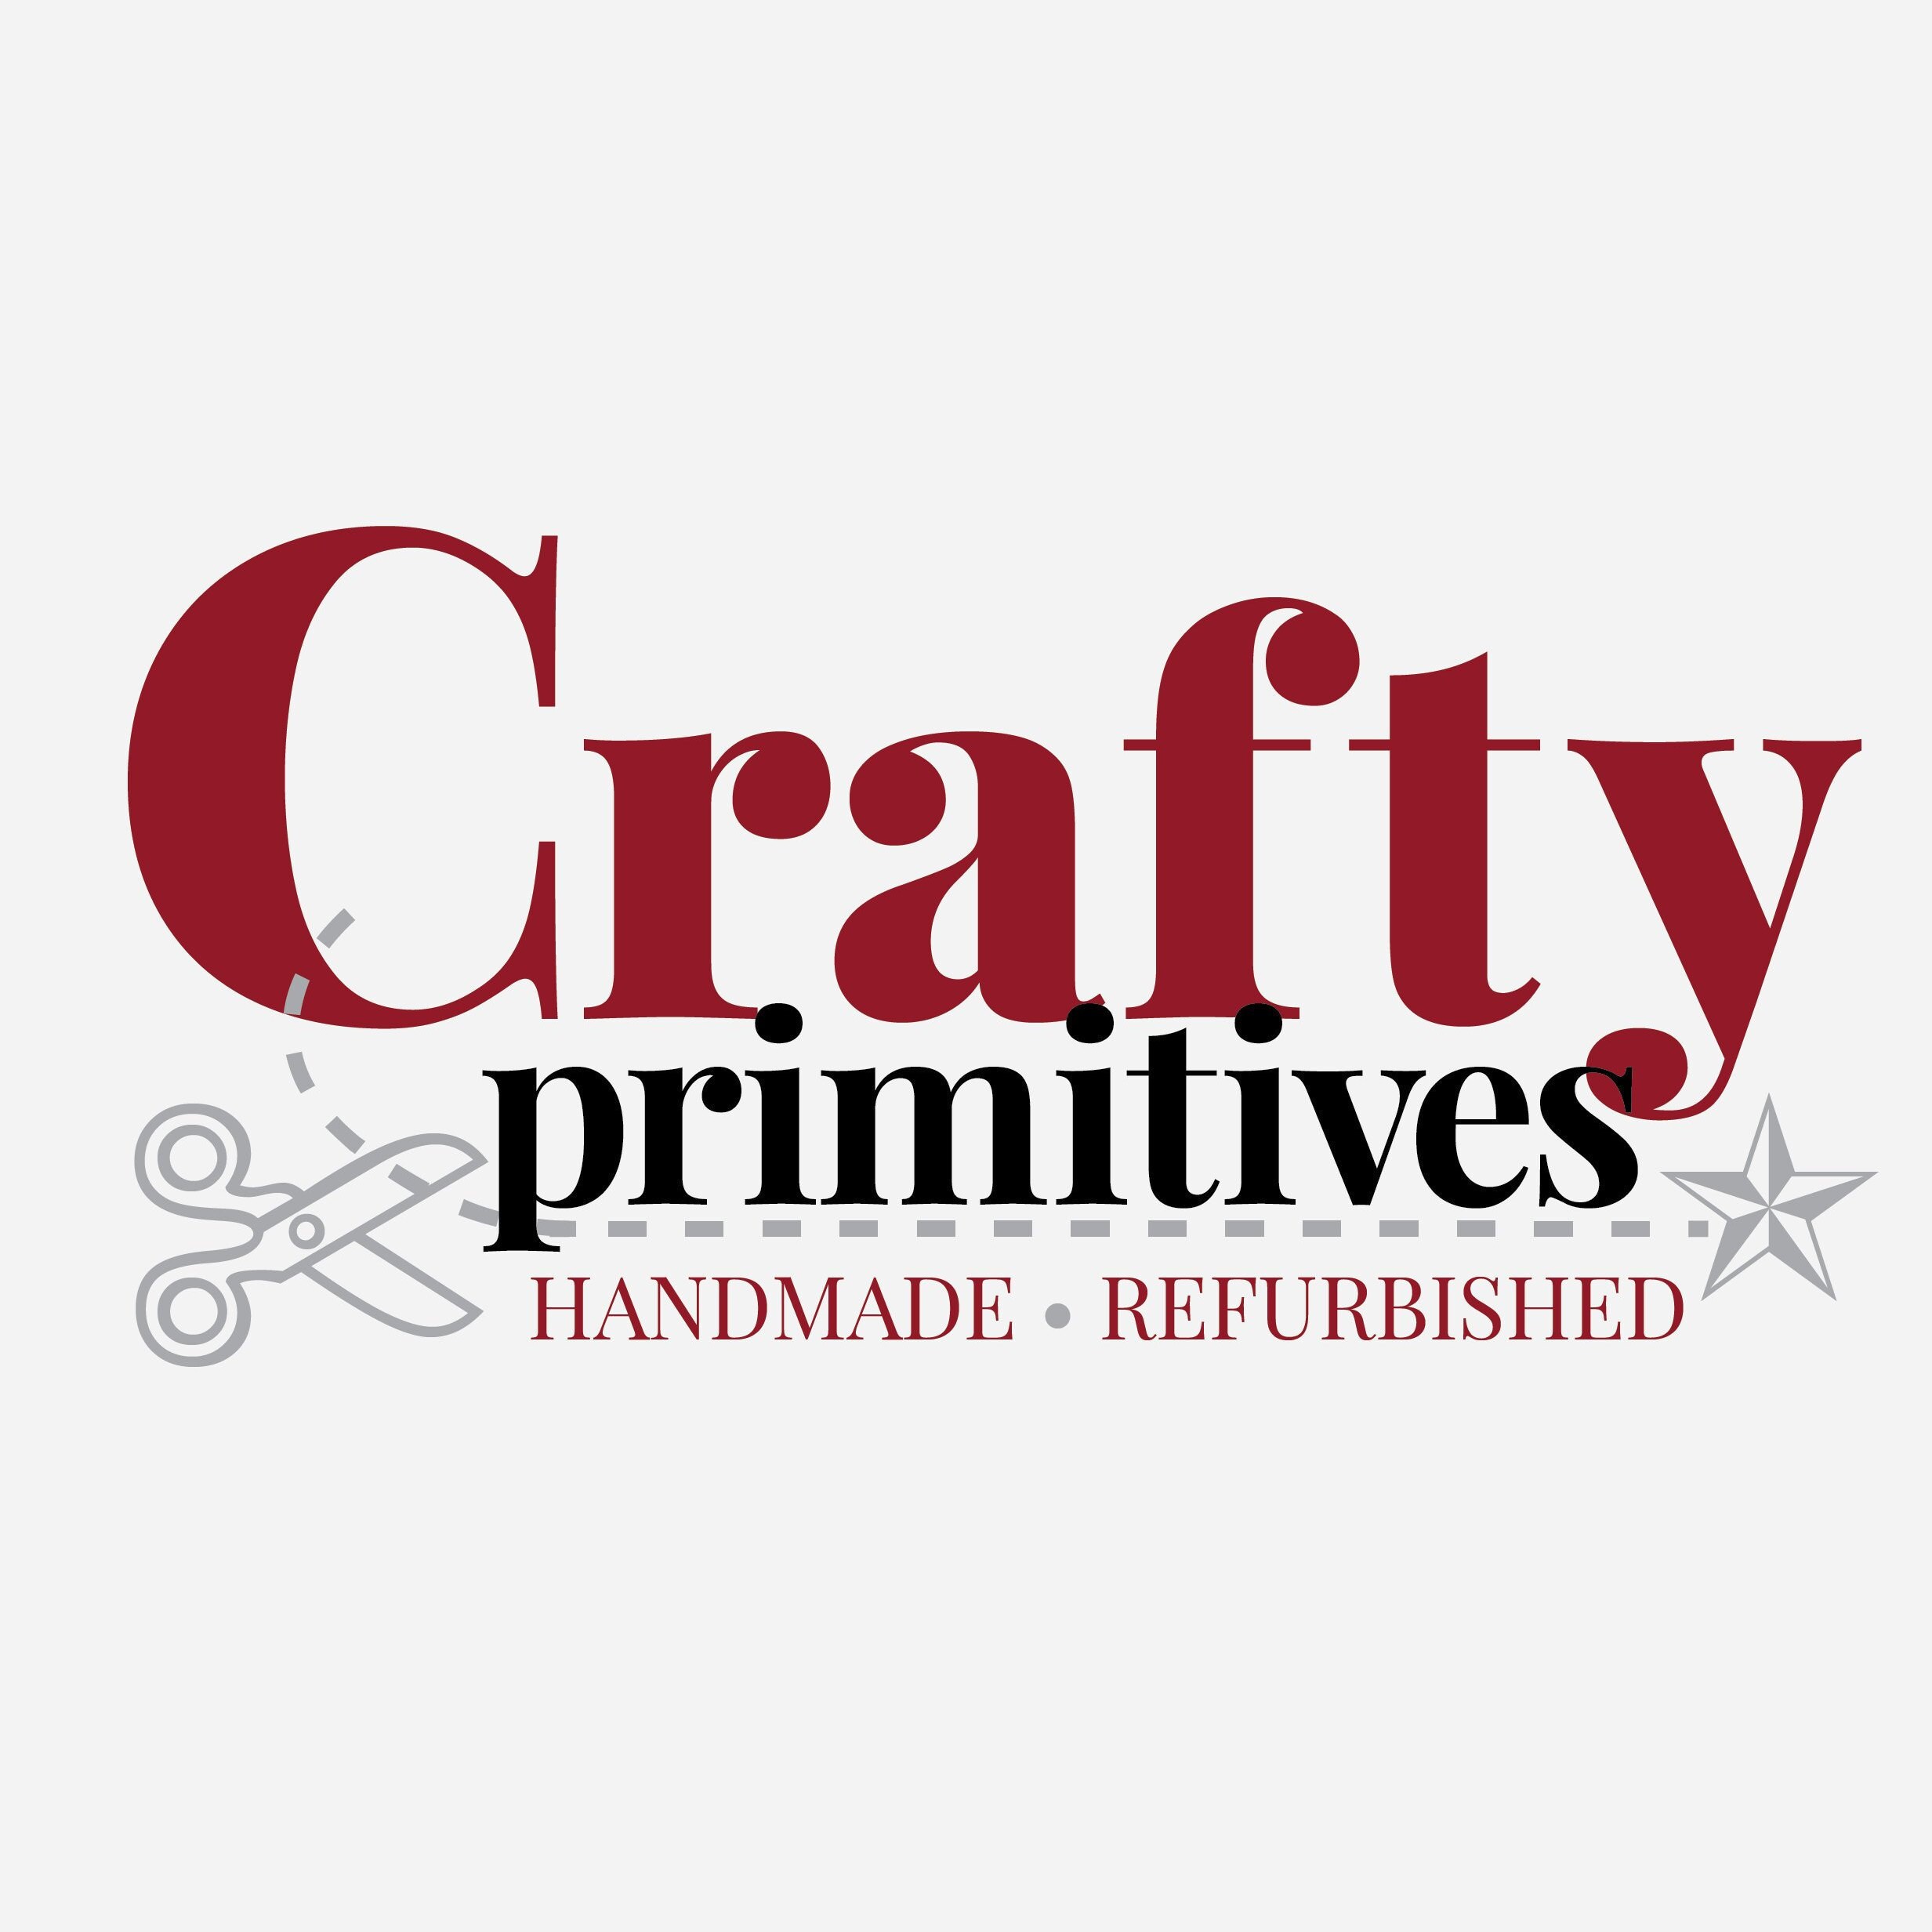 Shop  Craftsybay - Art Prints, Clothing, Drinkware